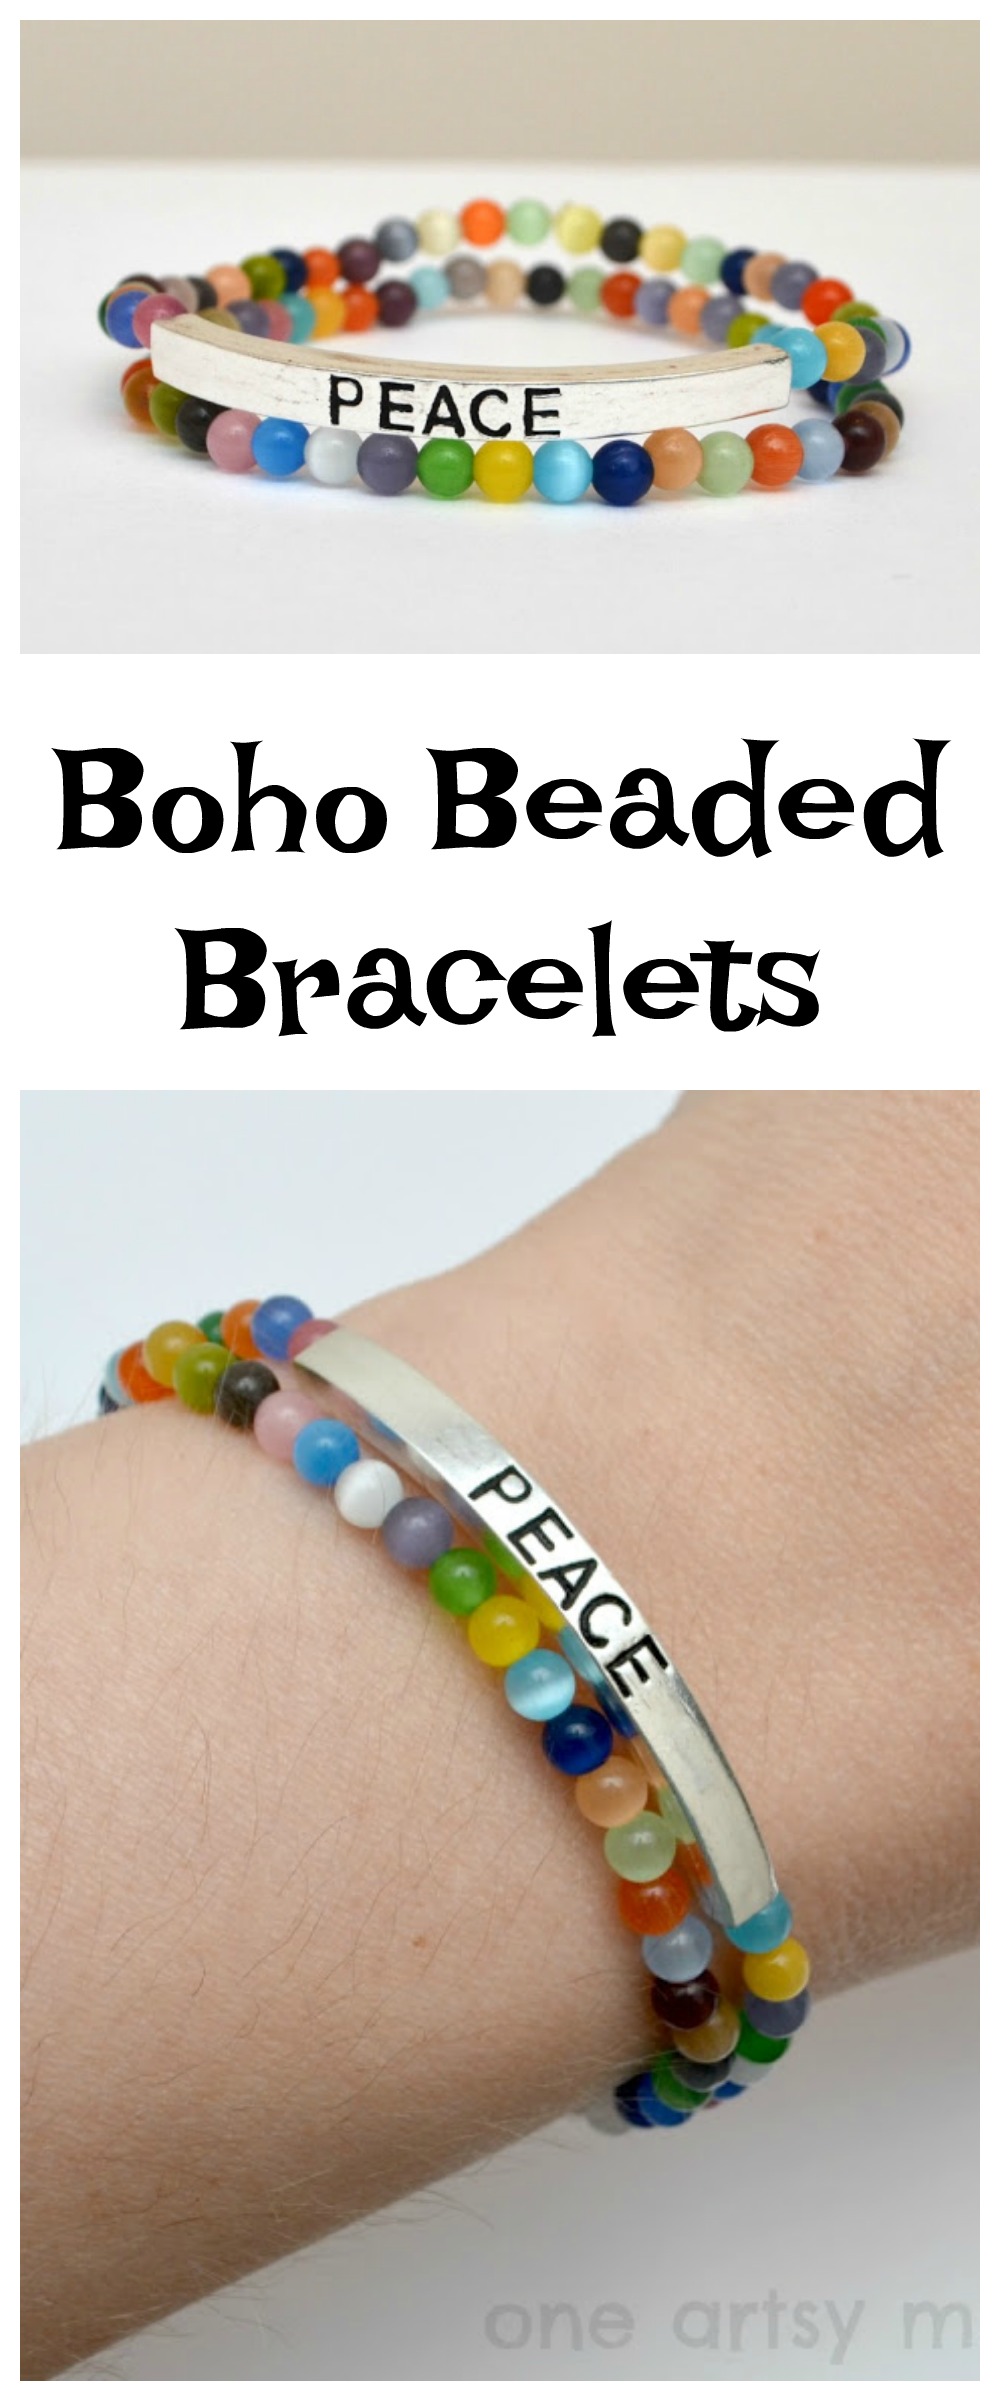 Boho Beaded Bracelets